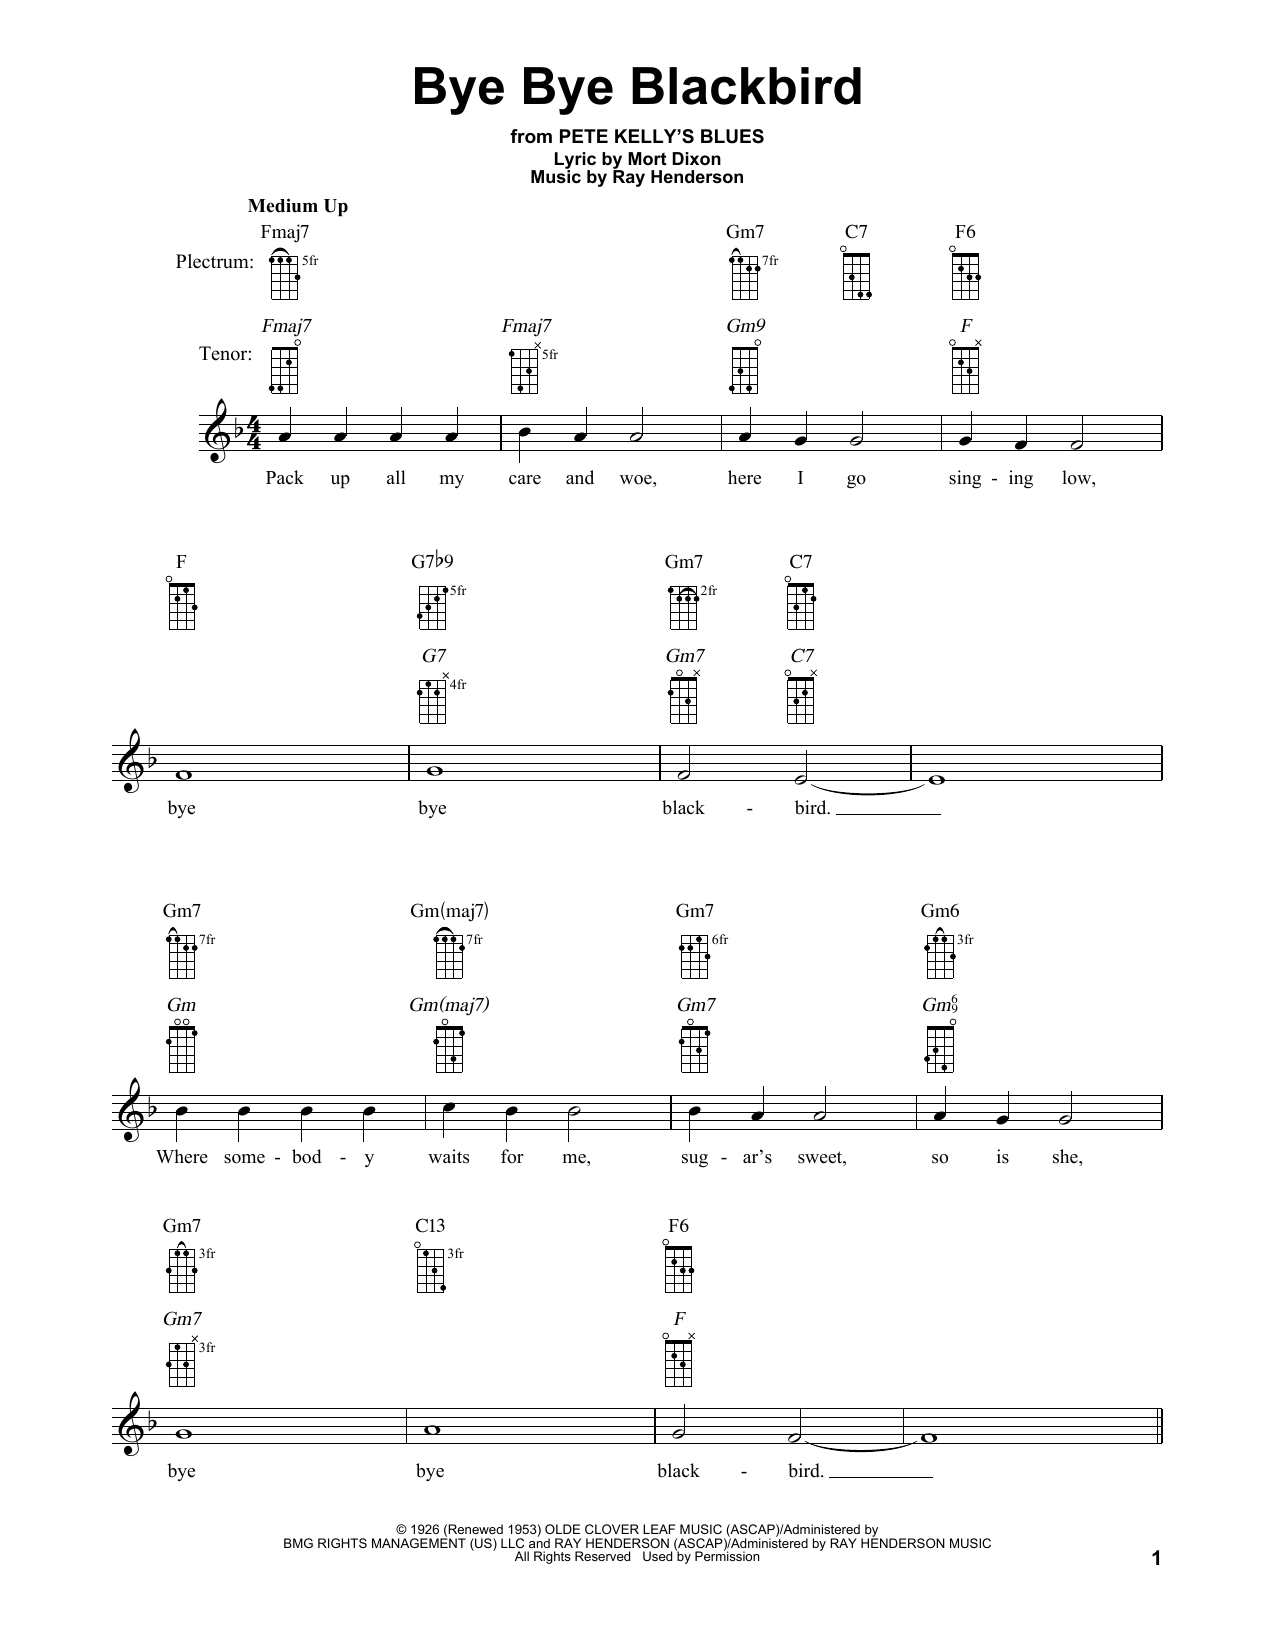 Ray Henderson Bye Bye Blackbird Sheet Music Notes & Chords for Banjo - Download or Print PDF